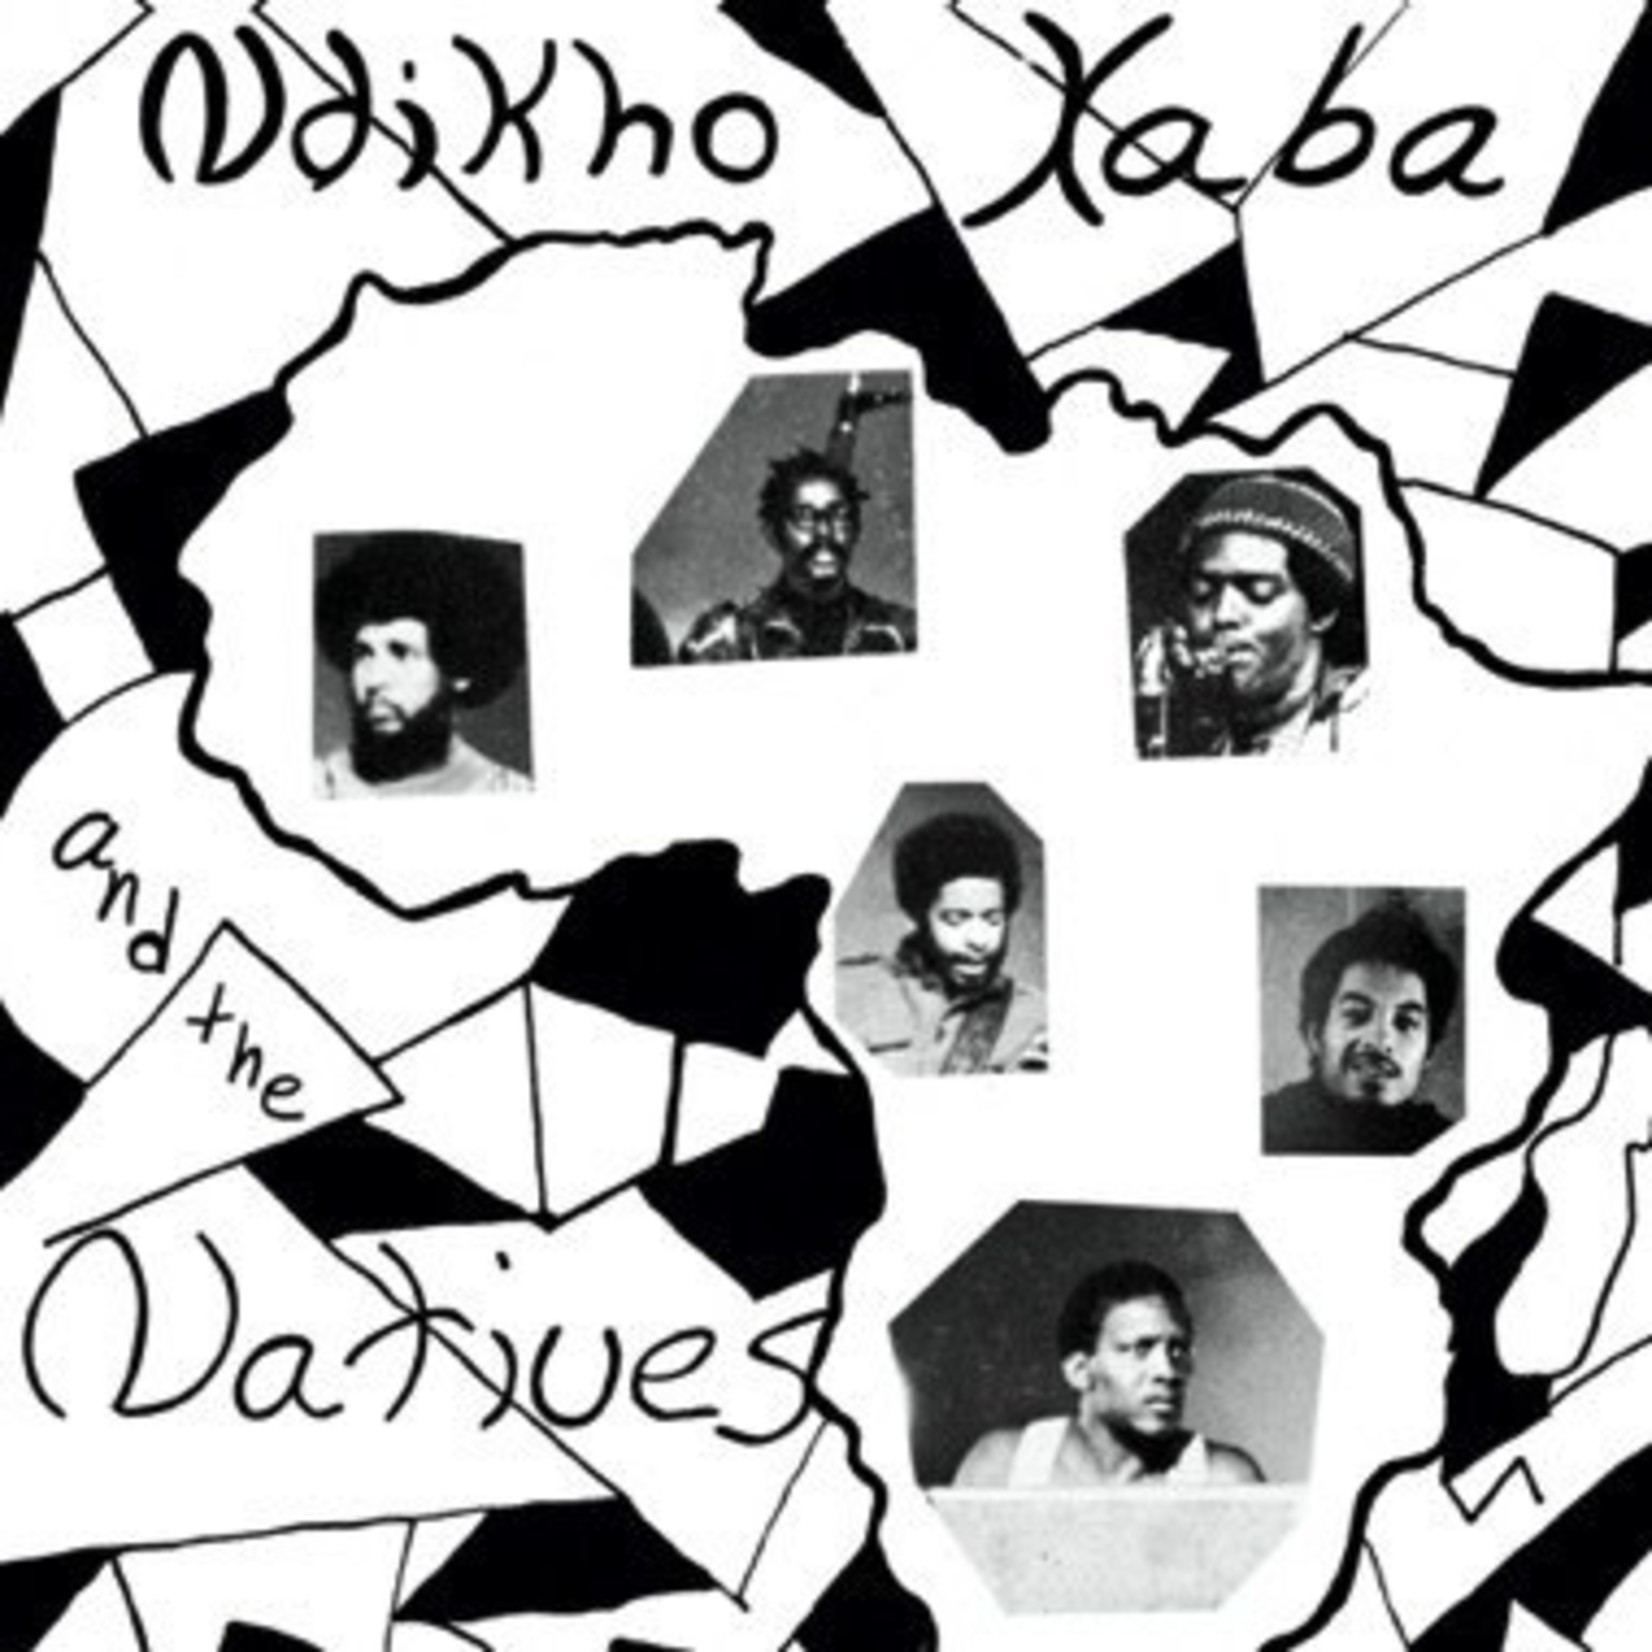 Mississippi Ndikho Xaba and the Natives - Ndikho Xaba and the Natives (LP)